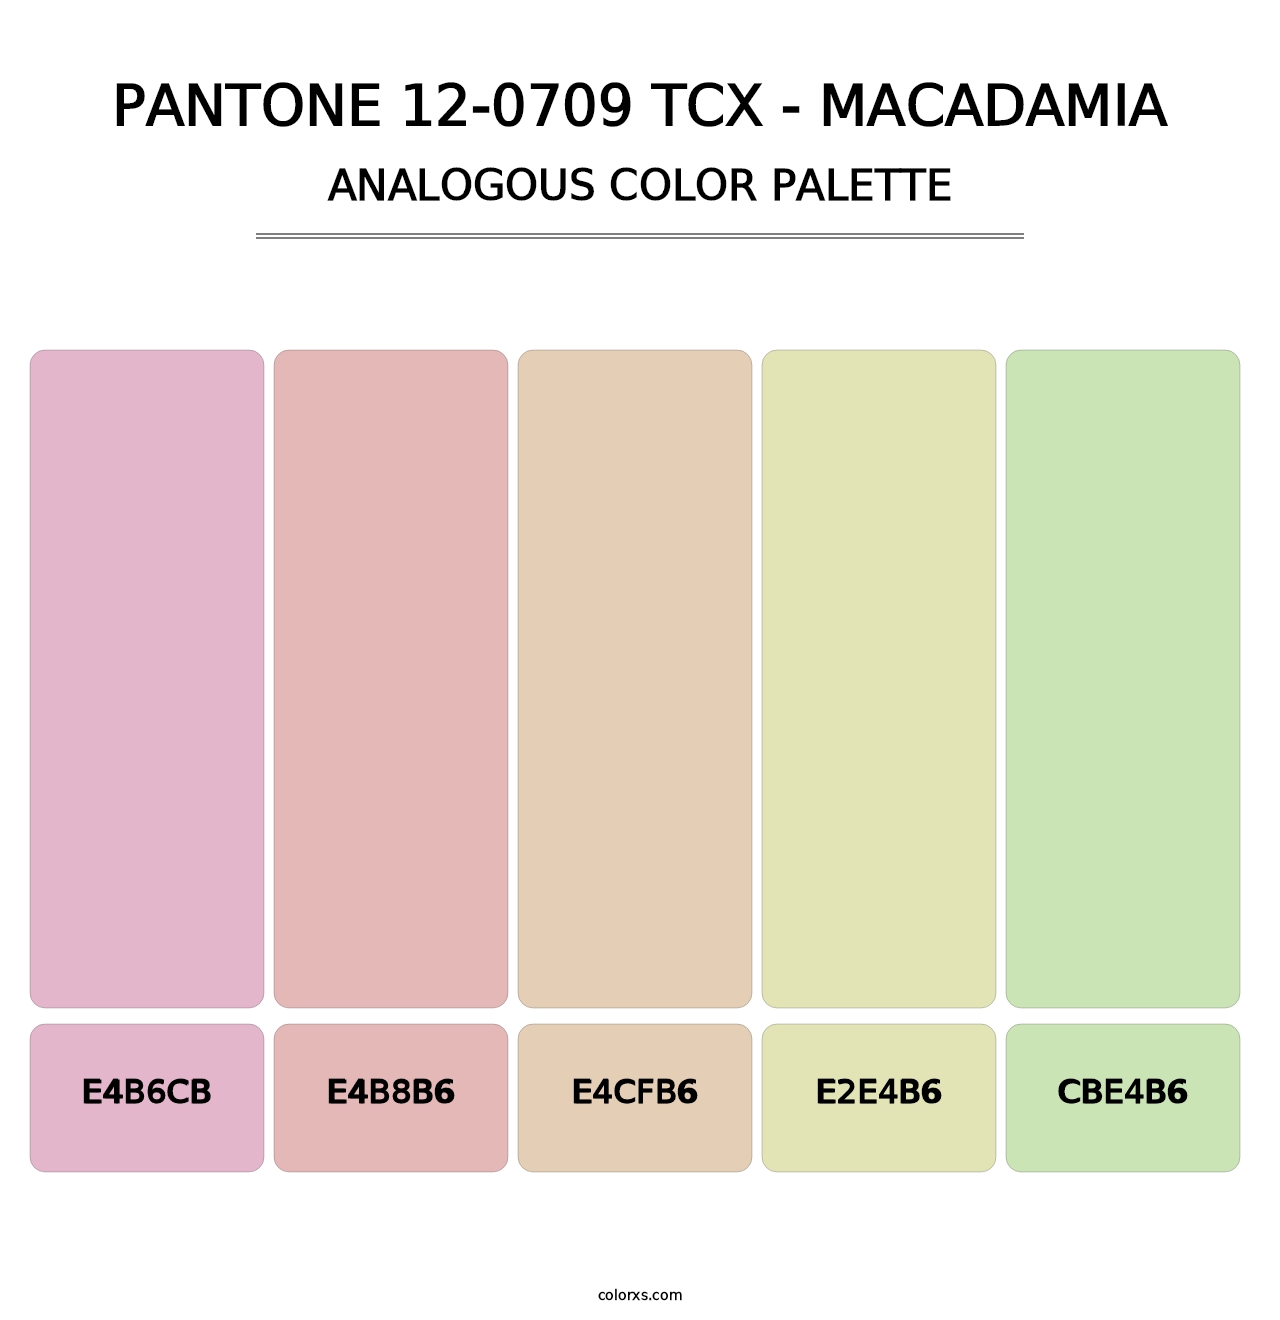 PANTONE 12-0709 TCX - Macadamia - Analogous Color Palette